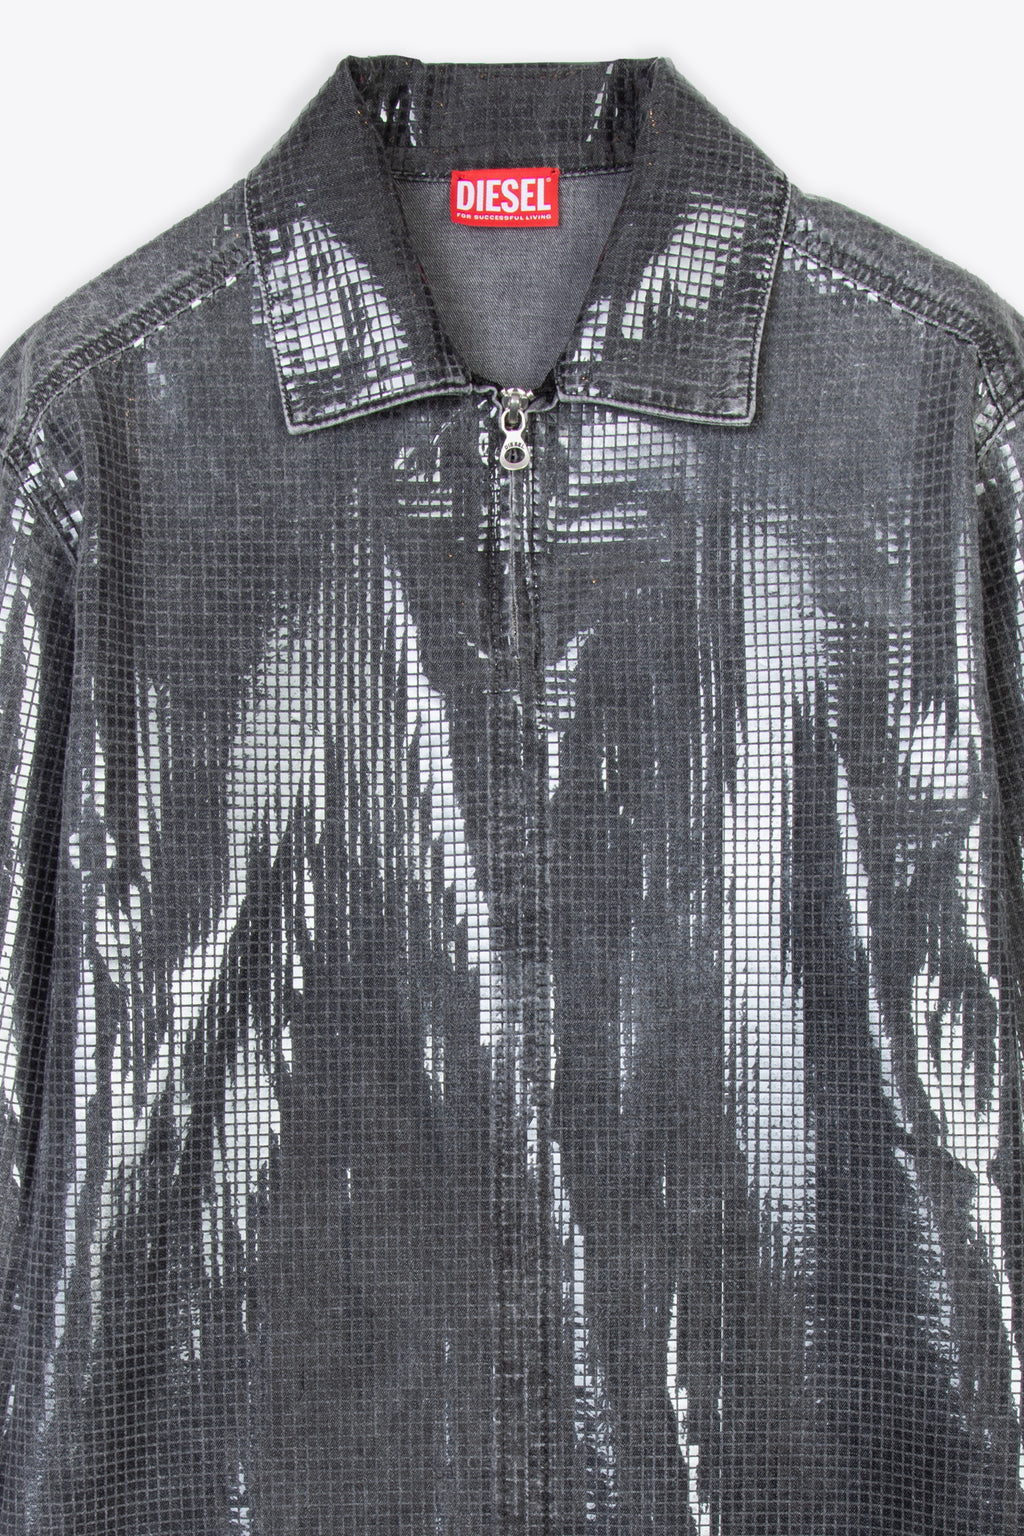 alt-image__Grey-denim-shirt-with-sequins-effect-coating---D-Brad-S
